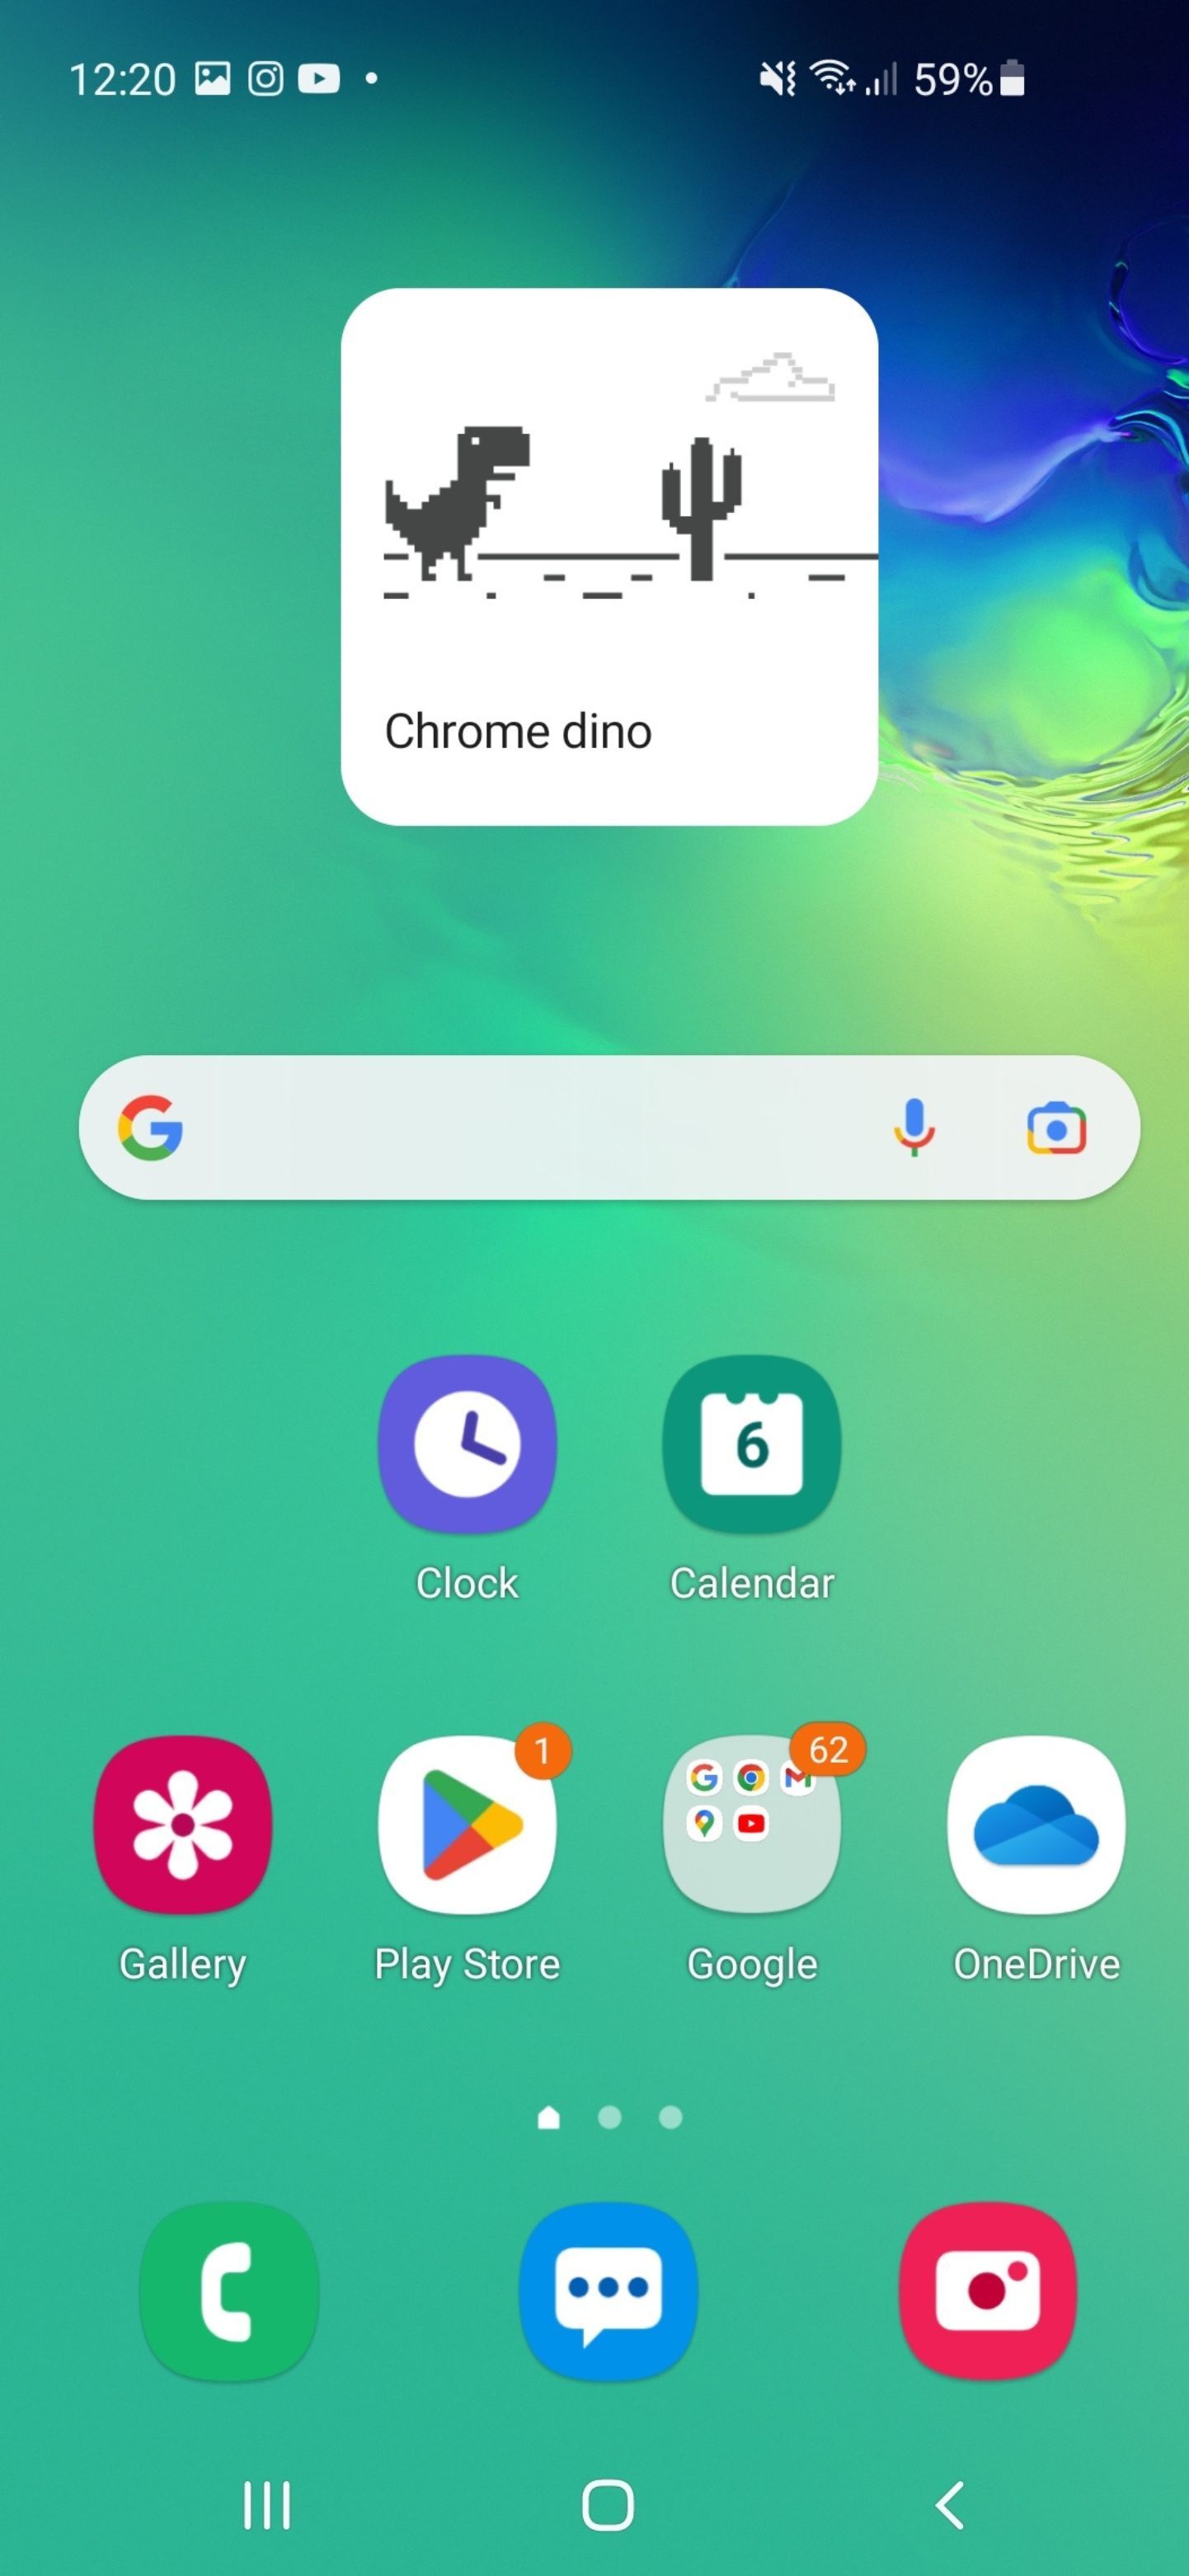 Screenshot Of Chrome Dino Game On Android Home Screen